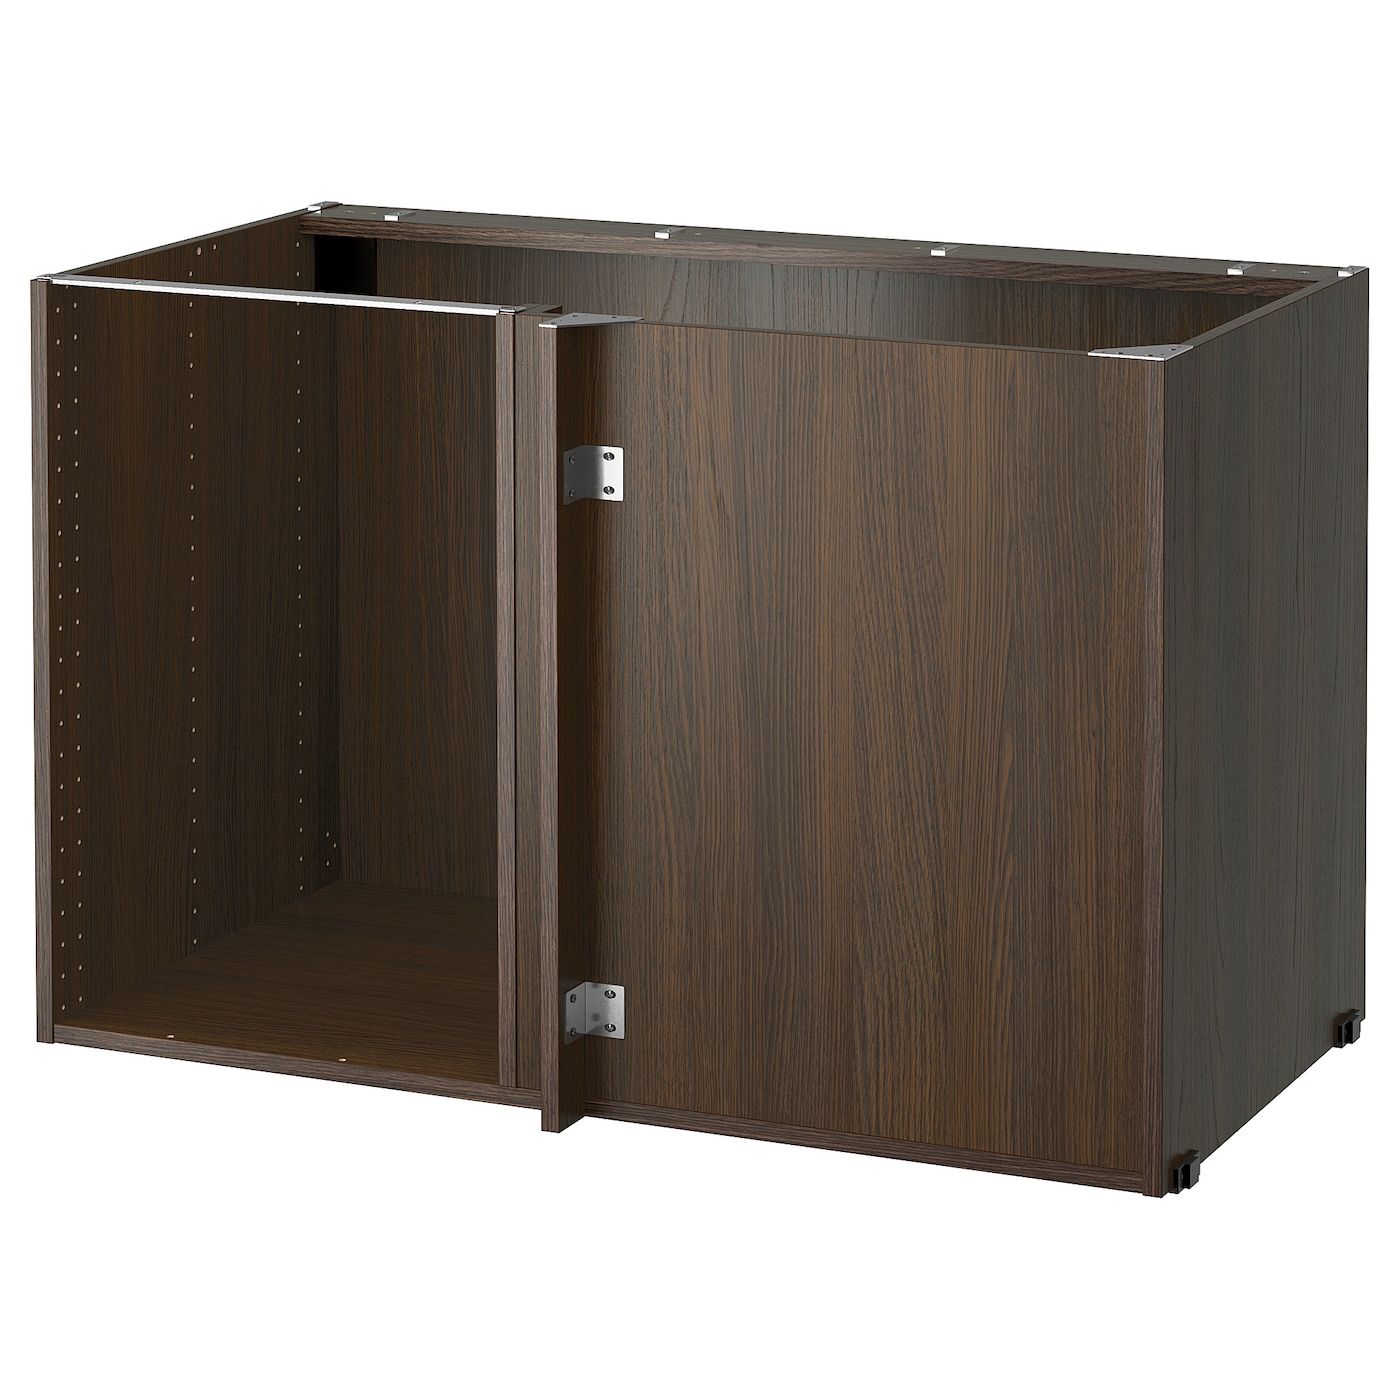 Sektion Base Corner Cabinet Frame – Wood Effect Brown Intended For Corner Units For Tv Ikea (View 15 of 15)